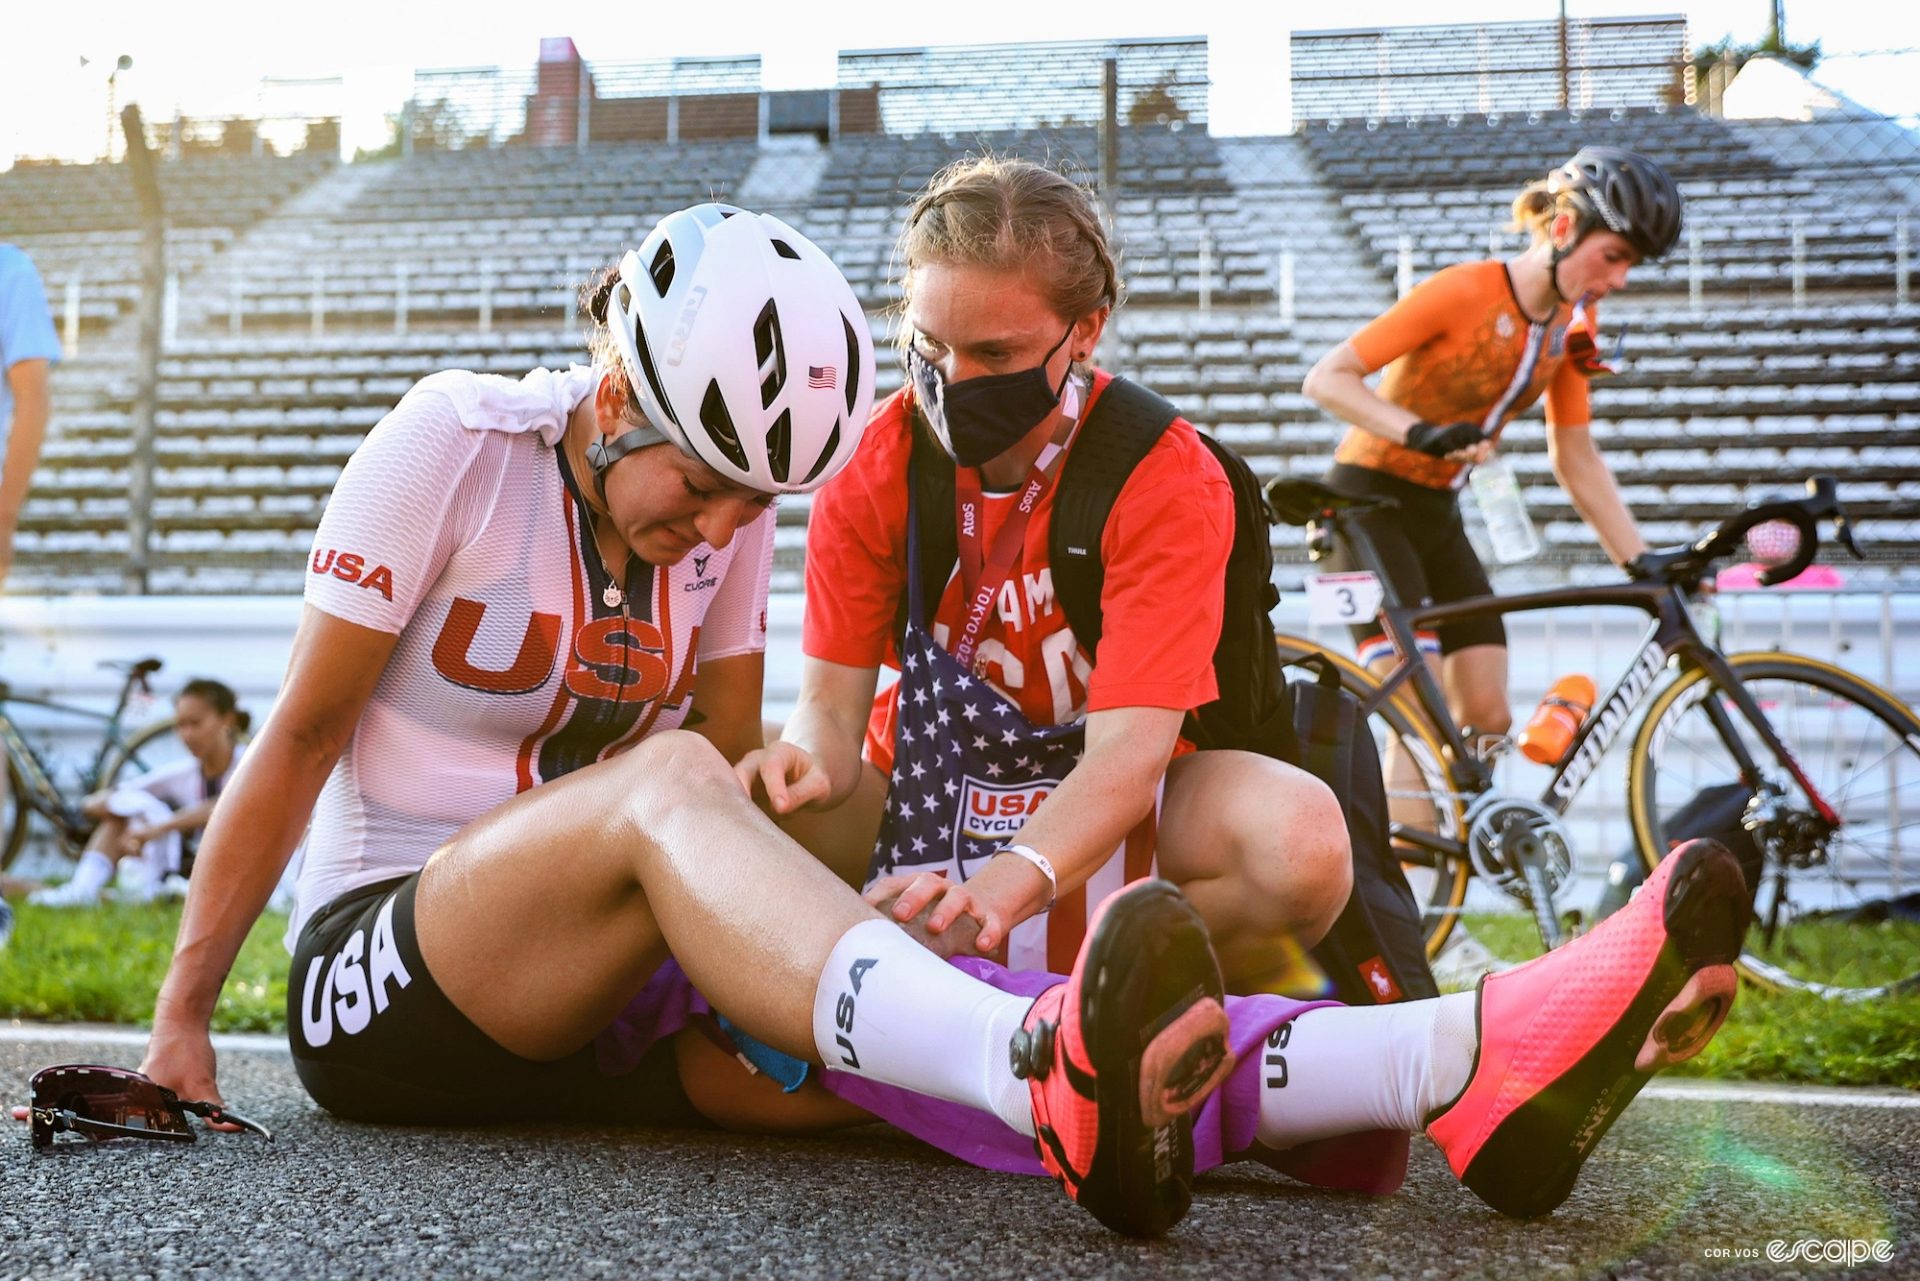 A staff member kneels down to talk to Chloe Dygert after a bike race. 